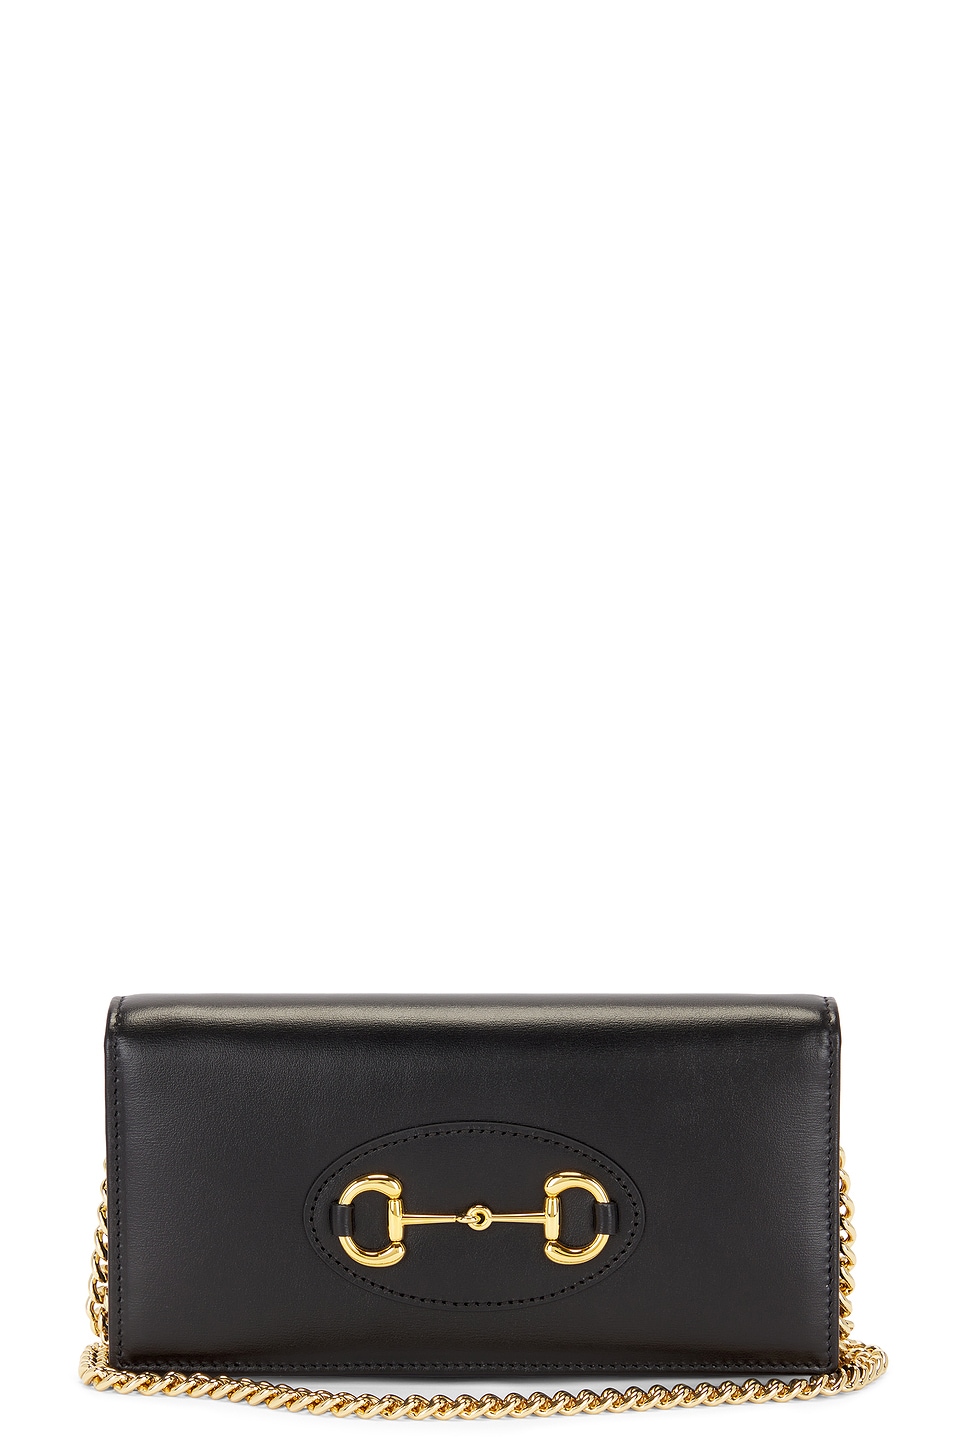 Gucci Horsebit Wallet On Chain Bag In Black